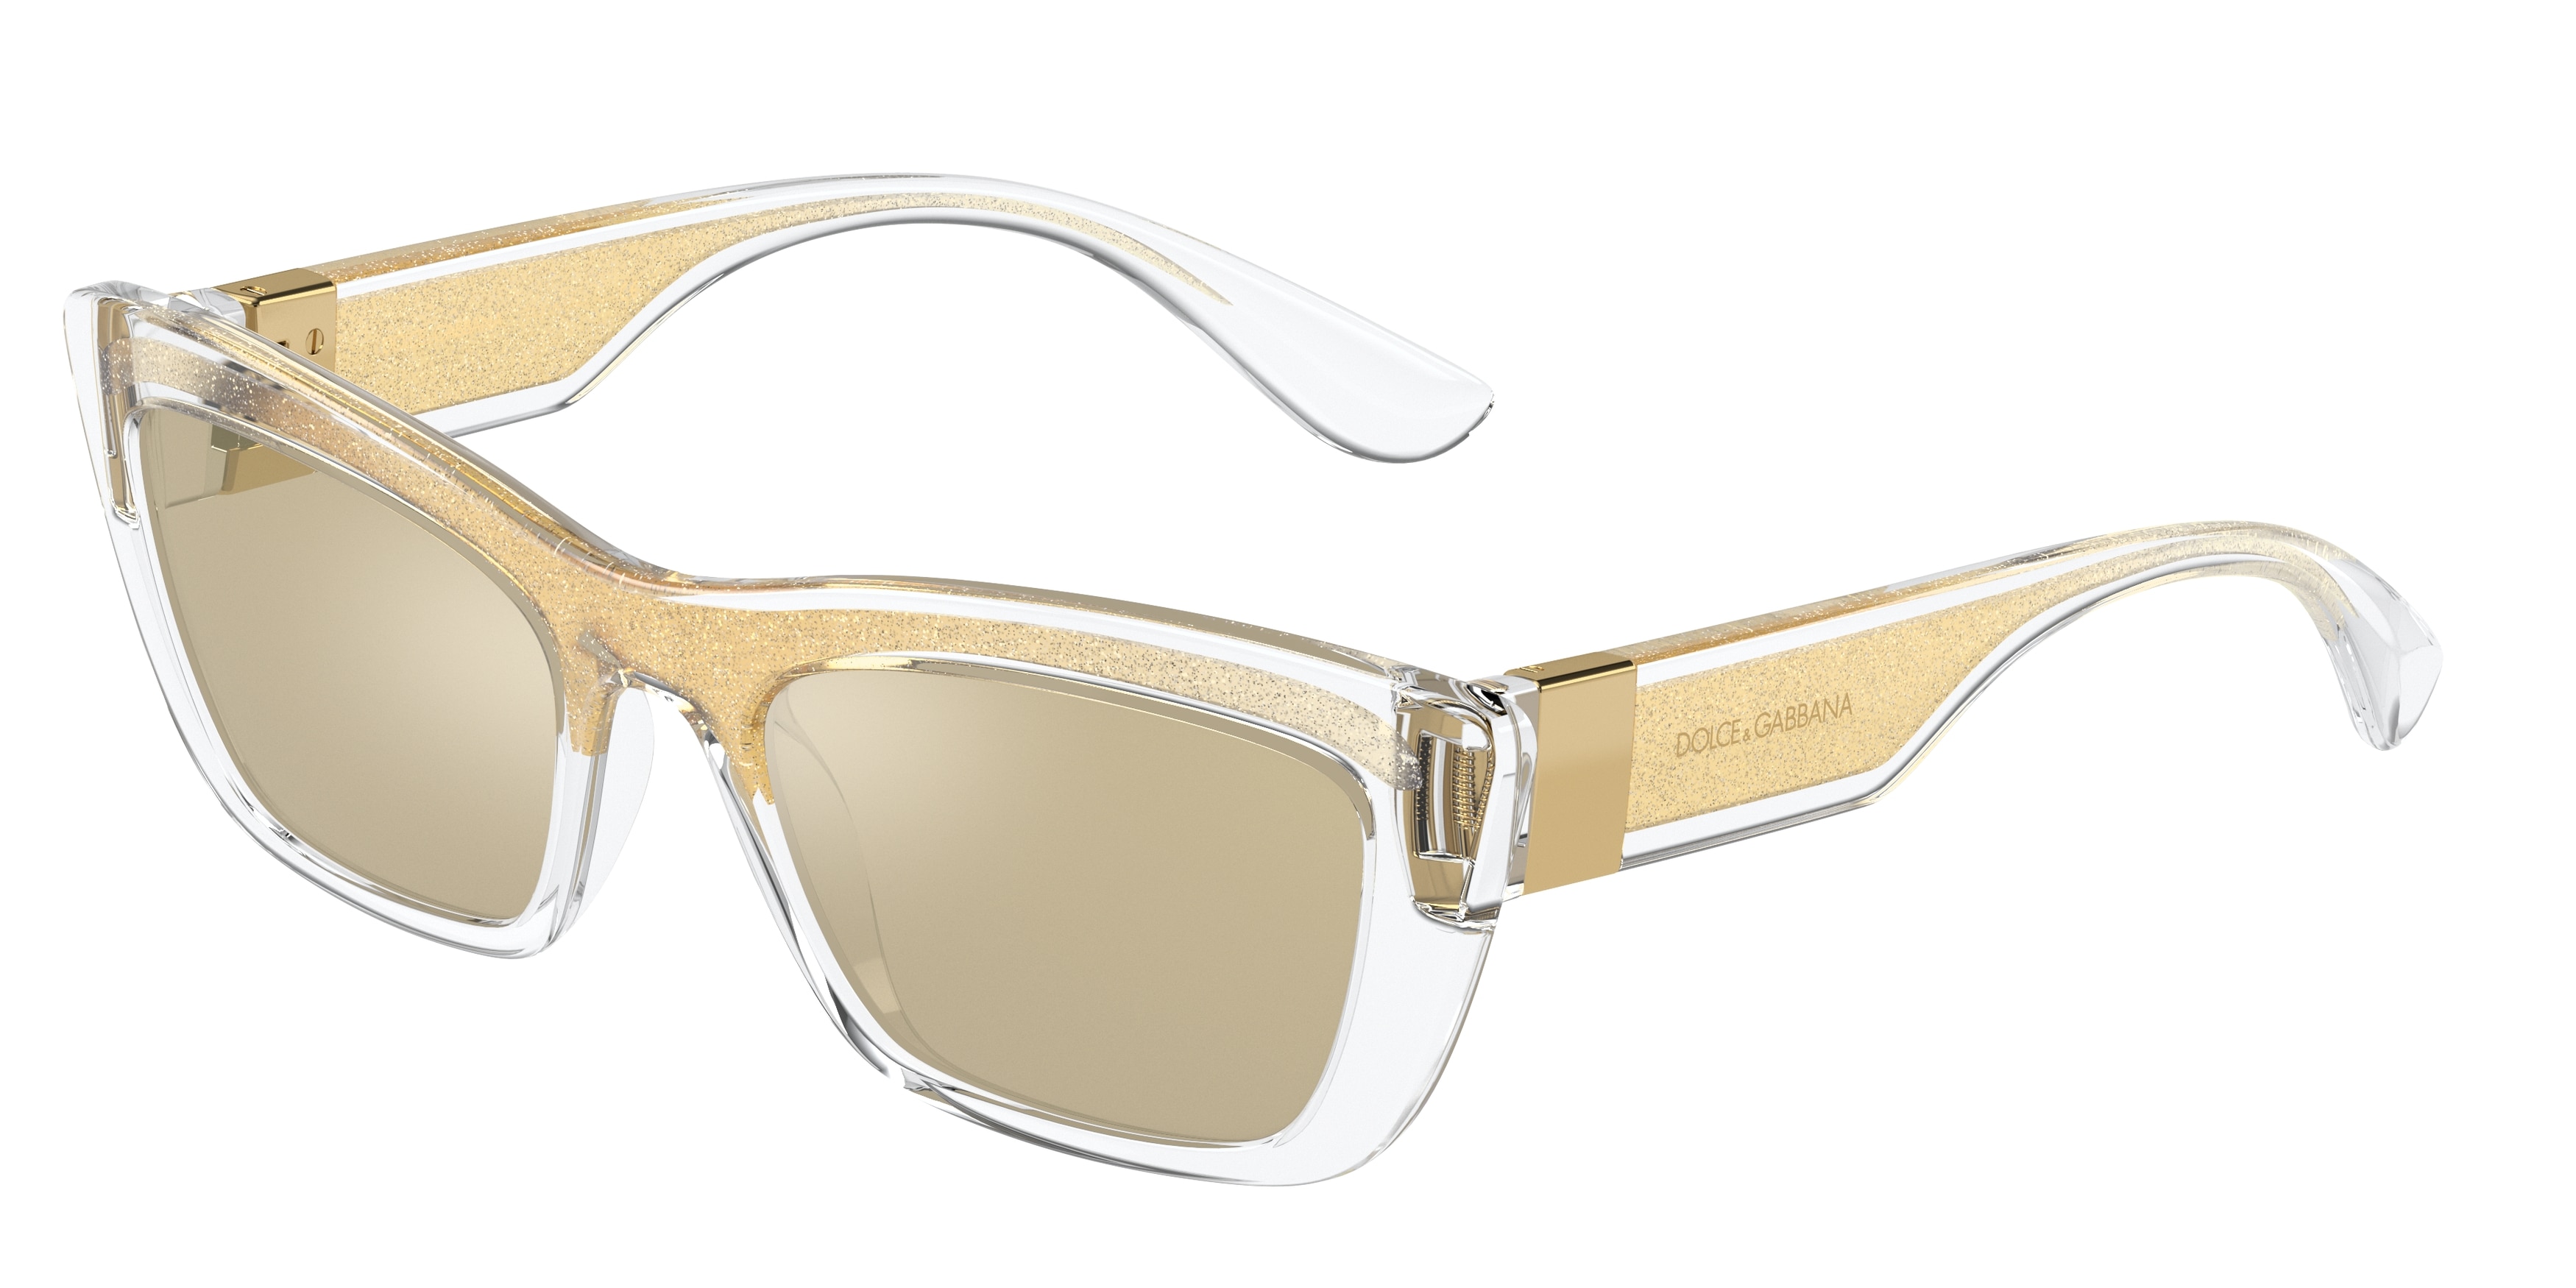 Dolce & Gabbana DG 6171 Sunglasses | Dolce & Gabbana Sunglasses | Designer  Sunglasses